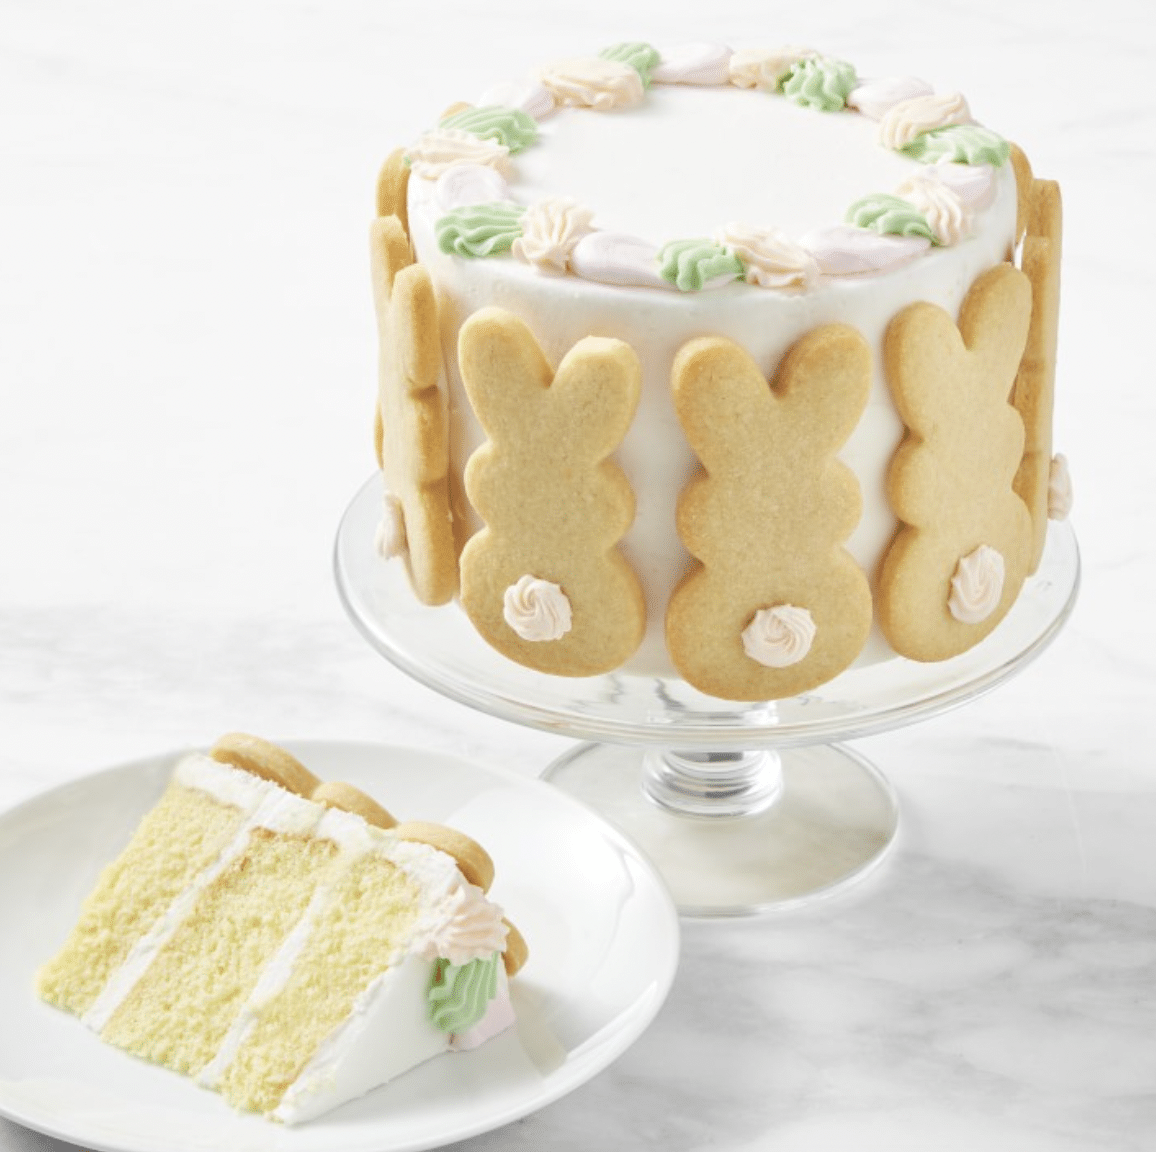 Williams - Sonoma cake and desserts - Easter dessert - Easter cake - 